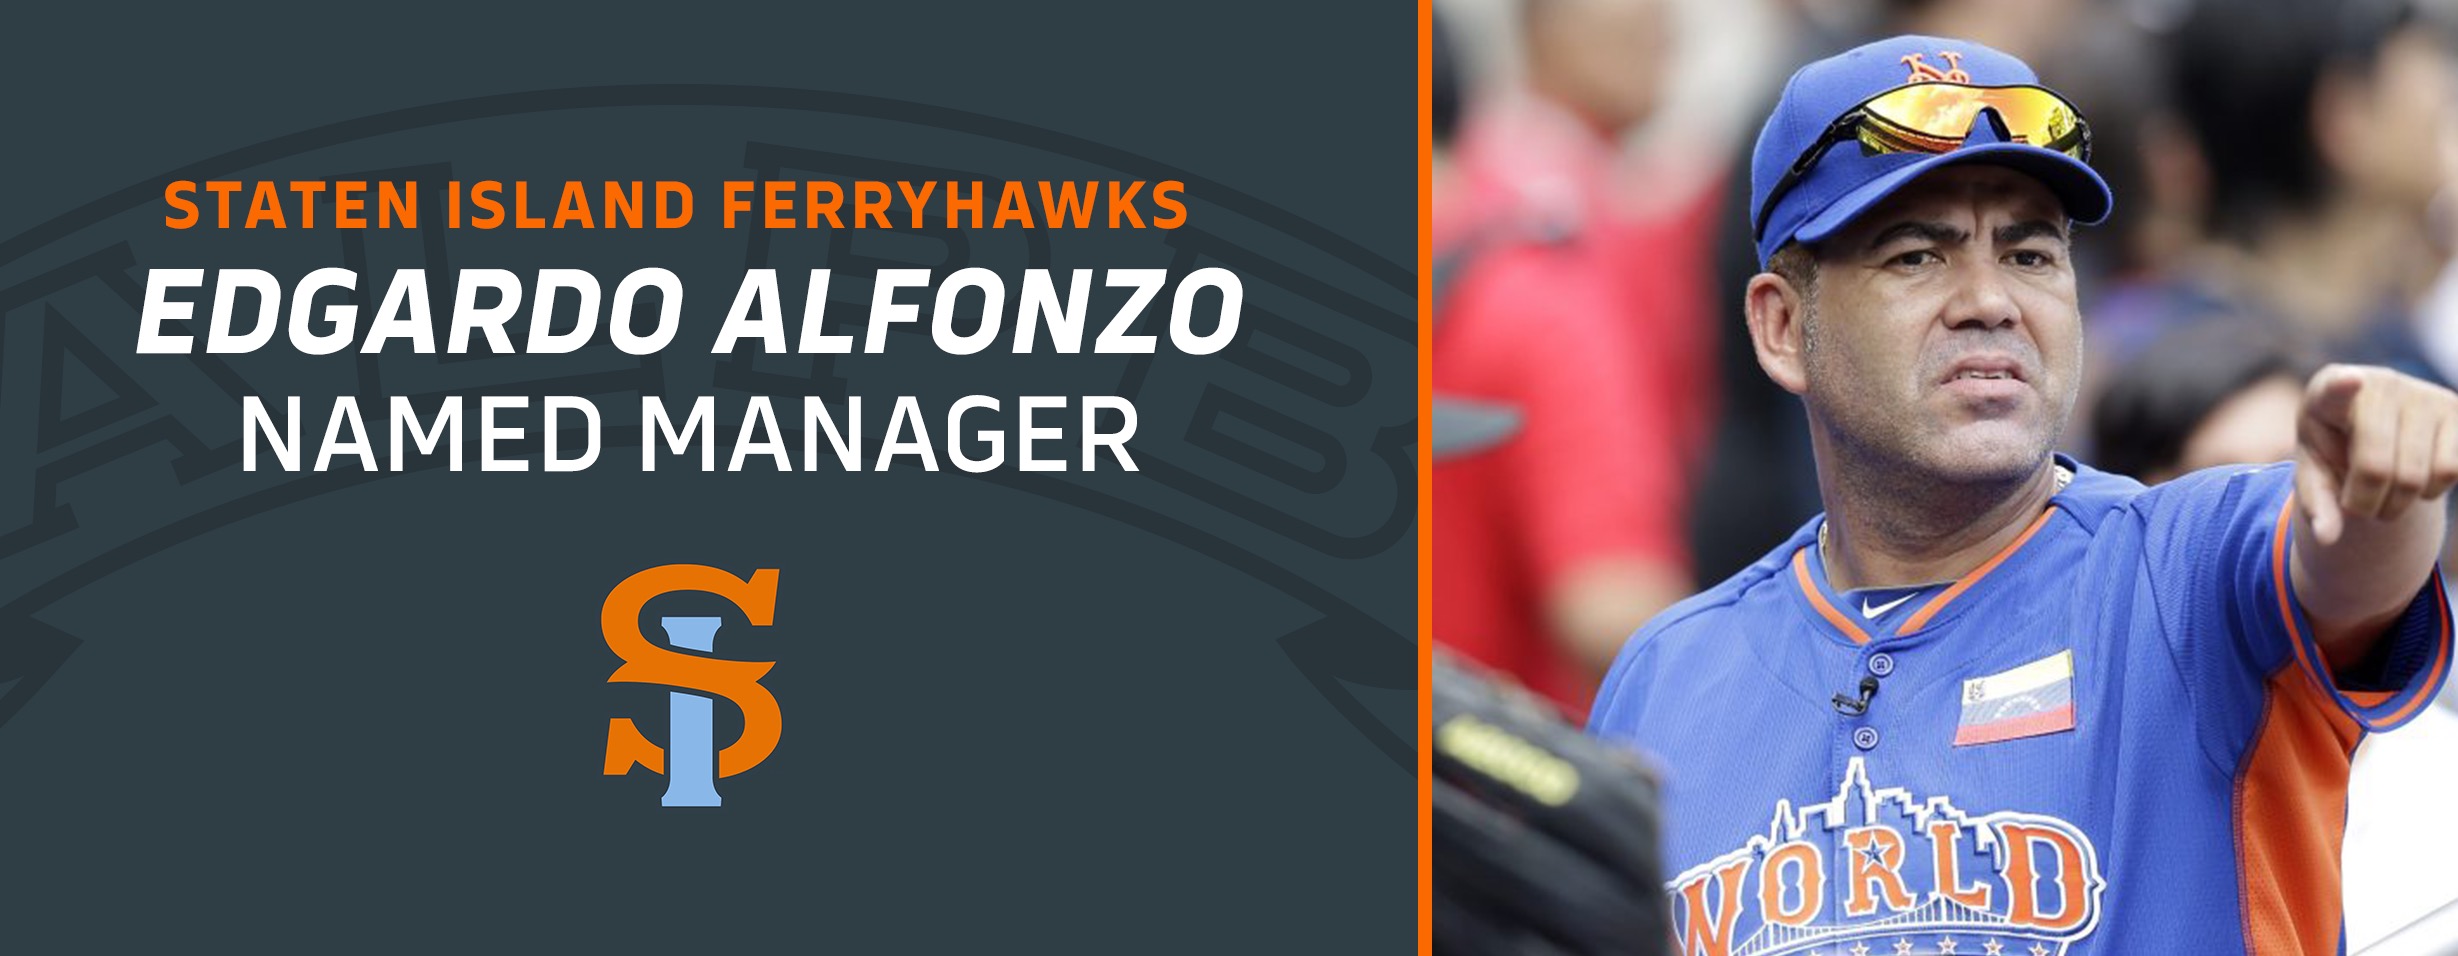 Ferryhawks Announce Edgardo Alfonzo as Manager